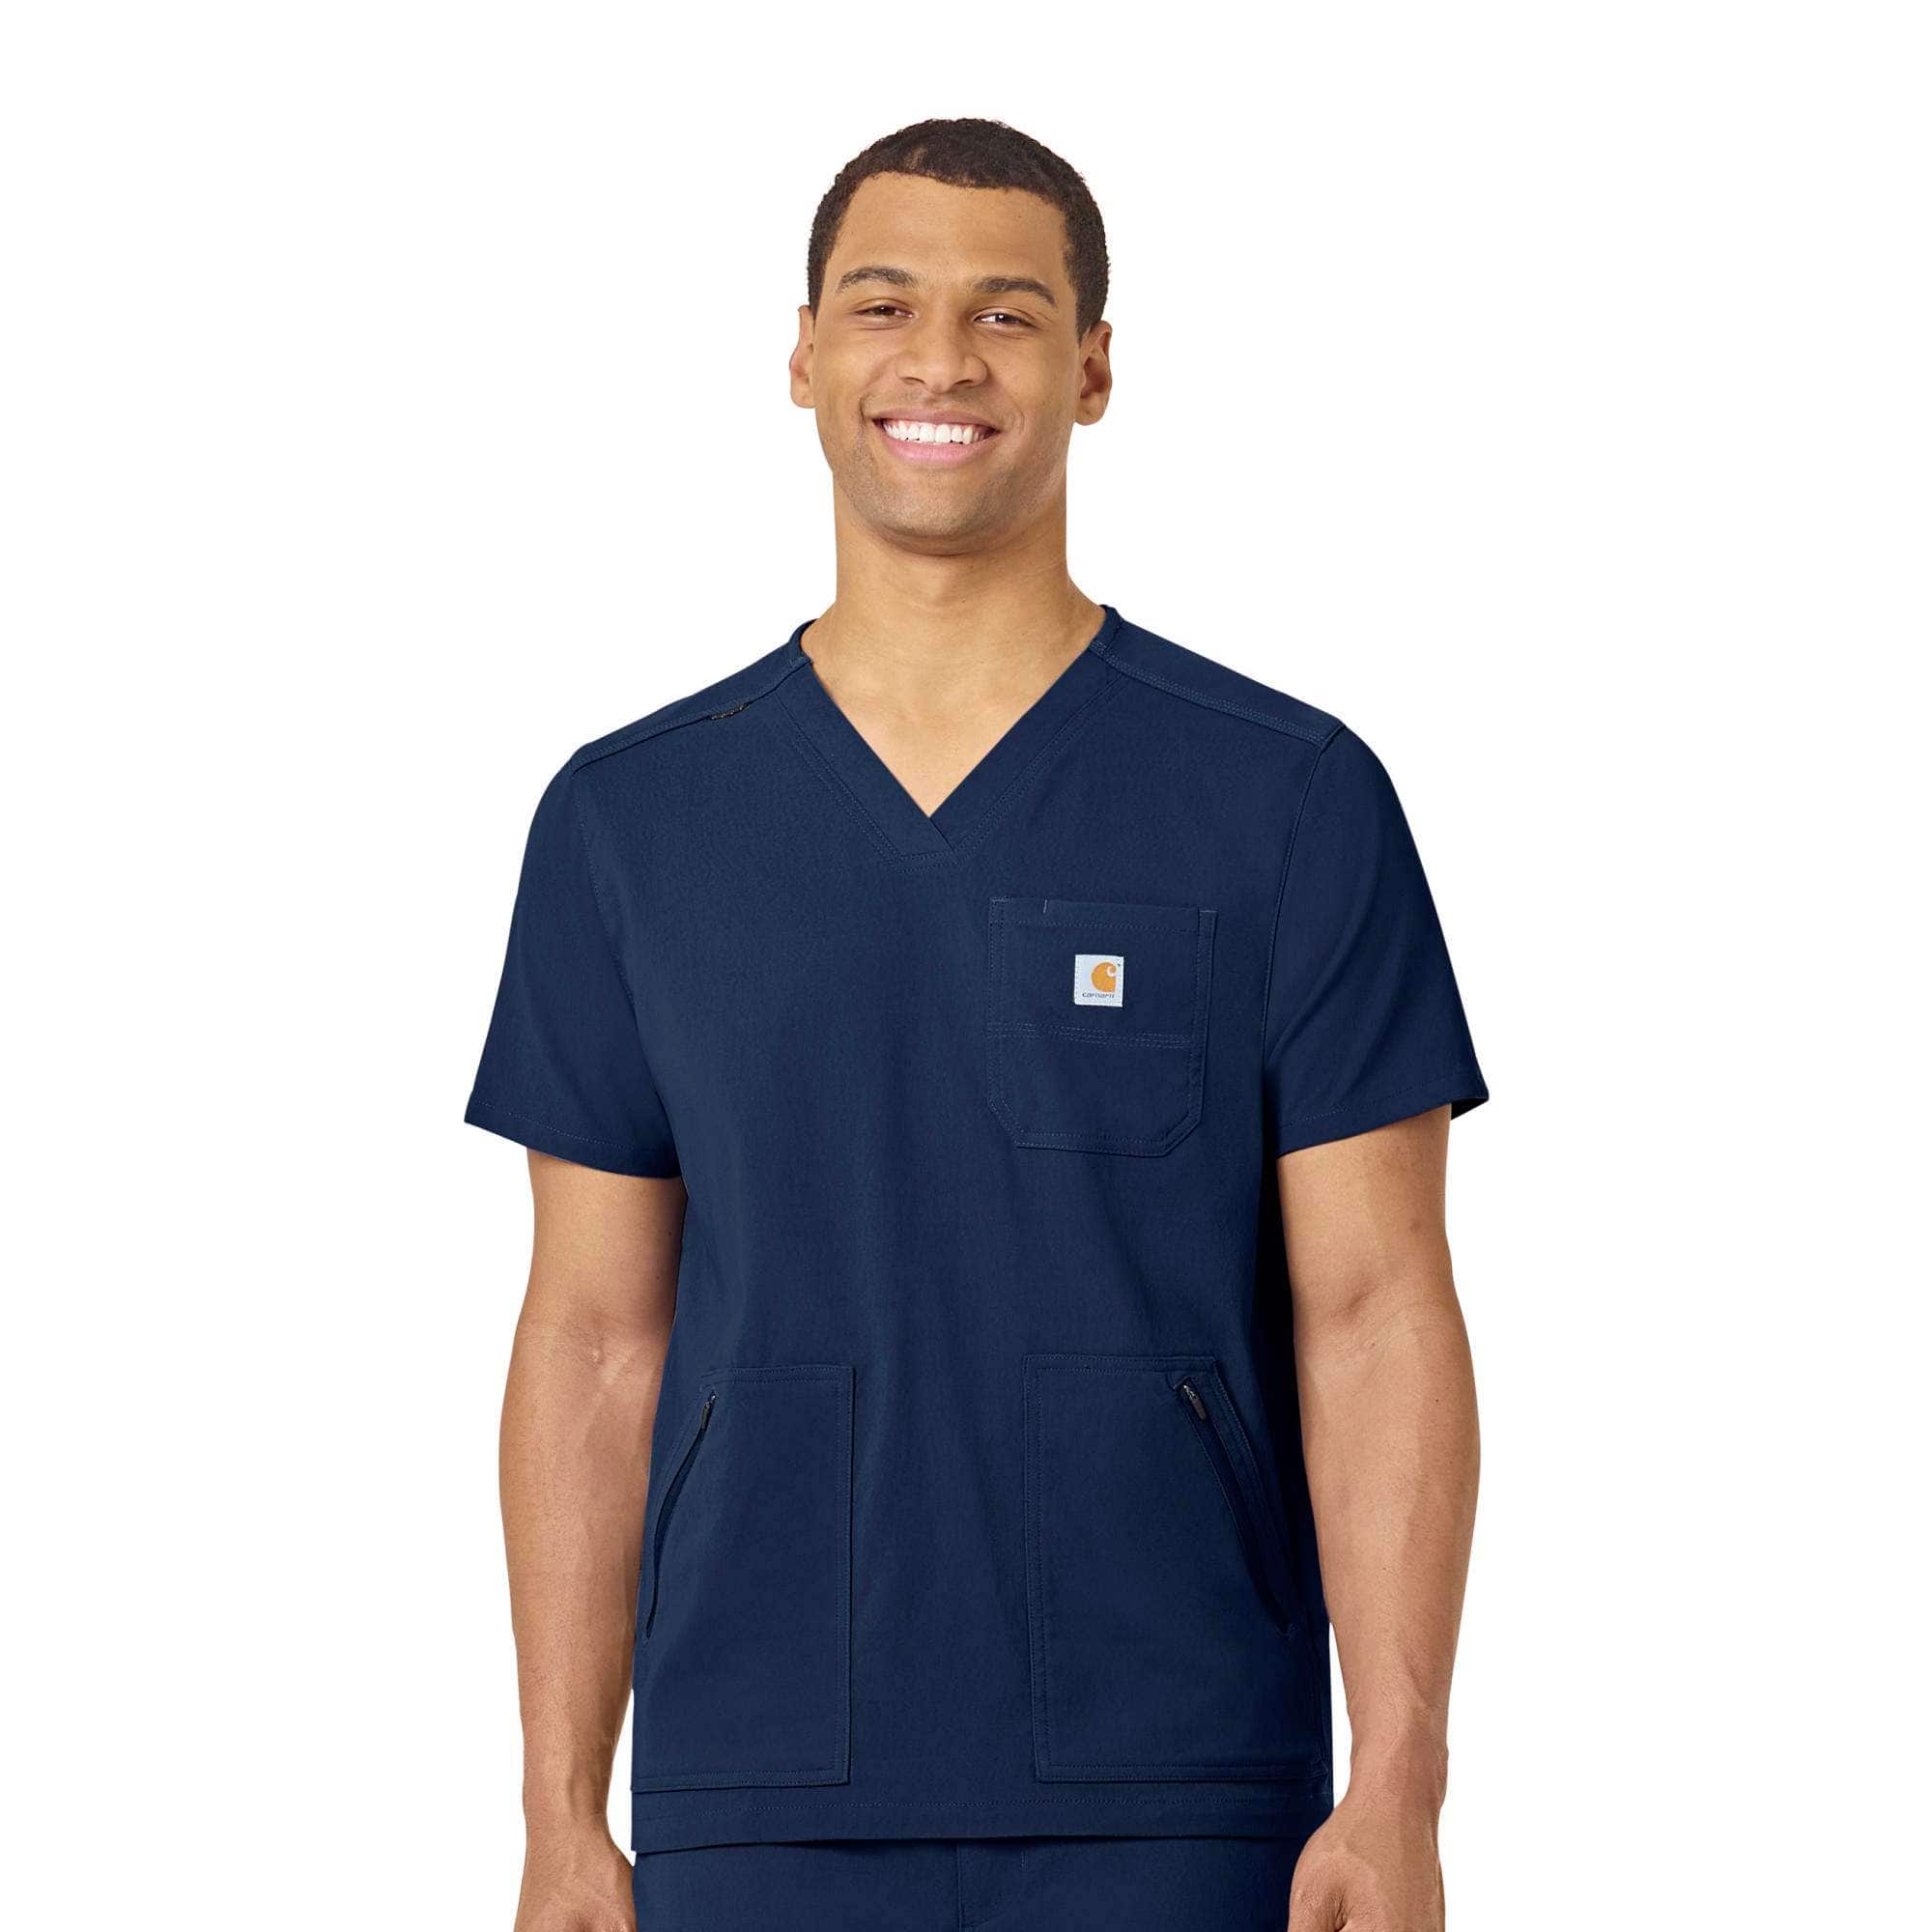 Dress A Med Men's Multi Pocket Lightweight Utility Medical Scrubs